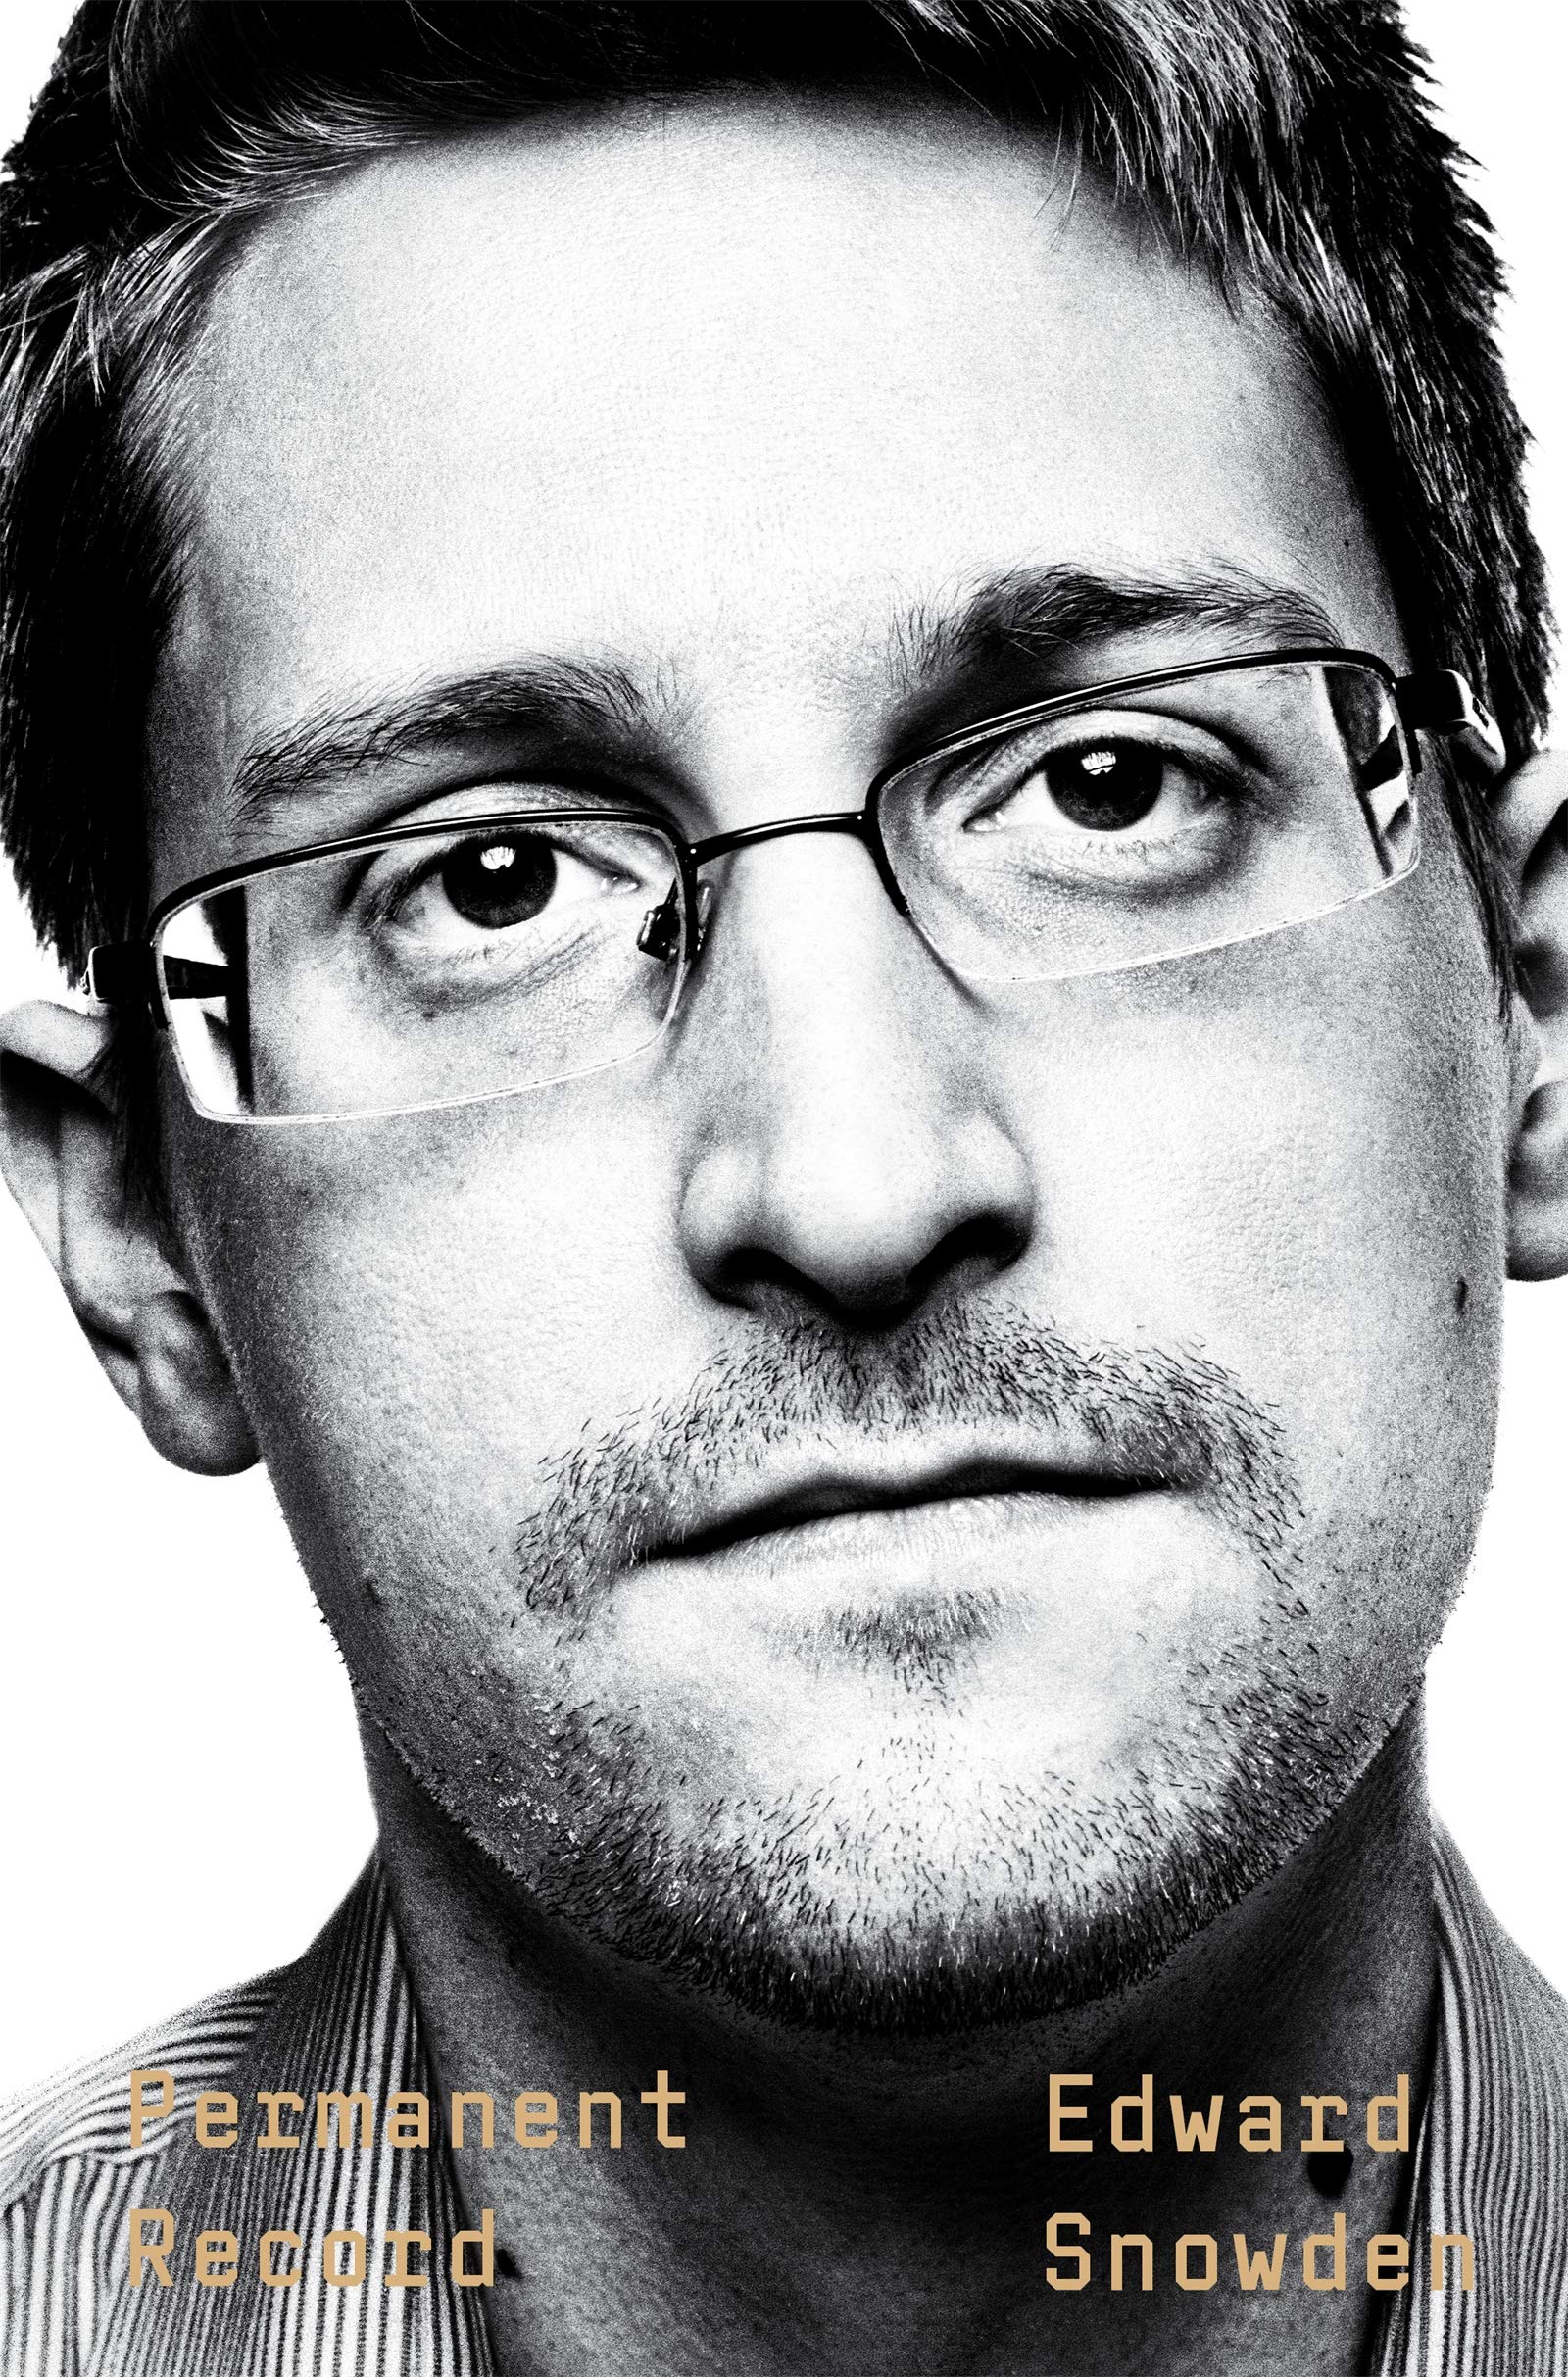 Vezi detalii pentru Permanent Record | Edward Snowden